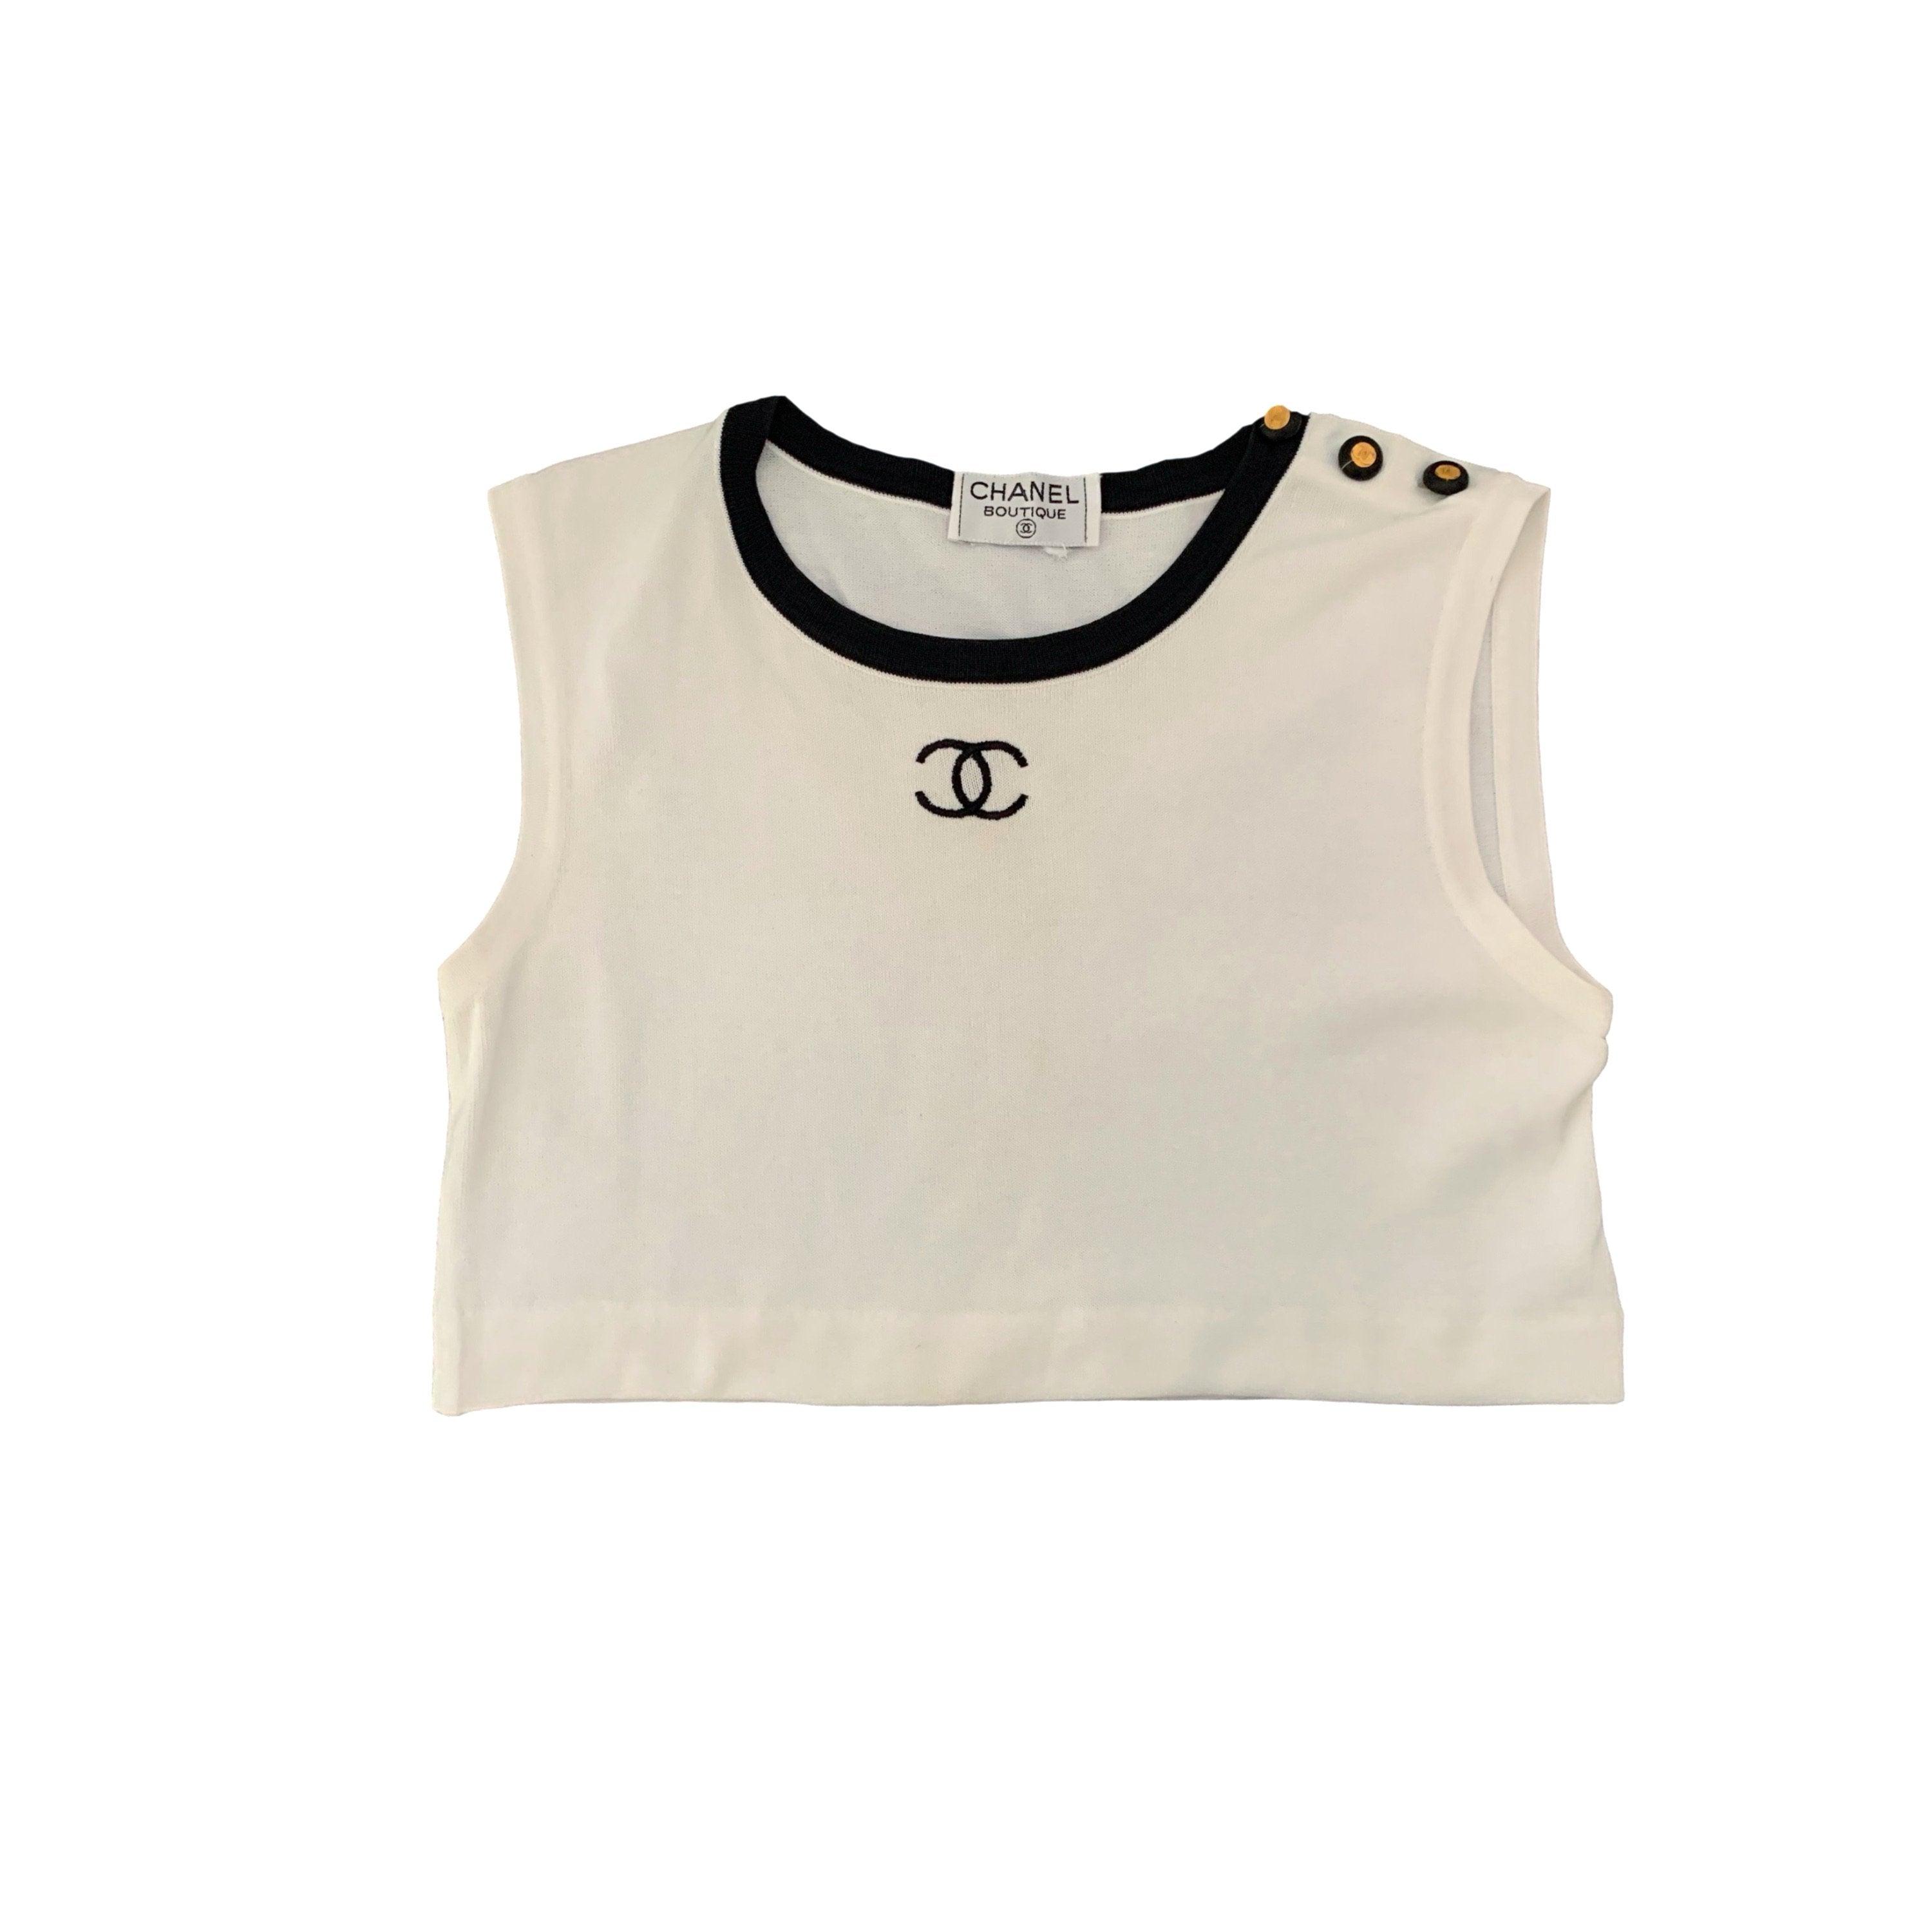 Treasures of NYC - Chanel White Logo Crop Top